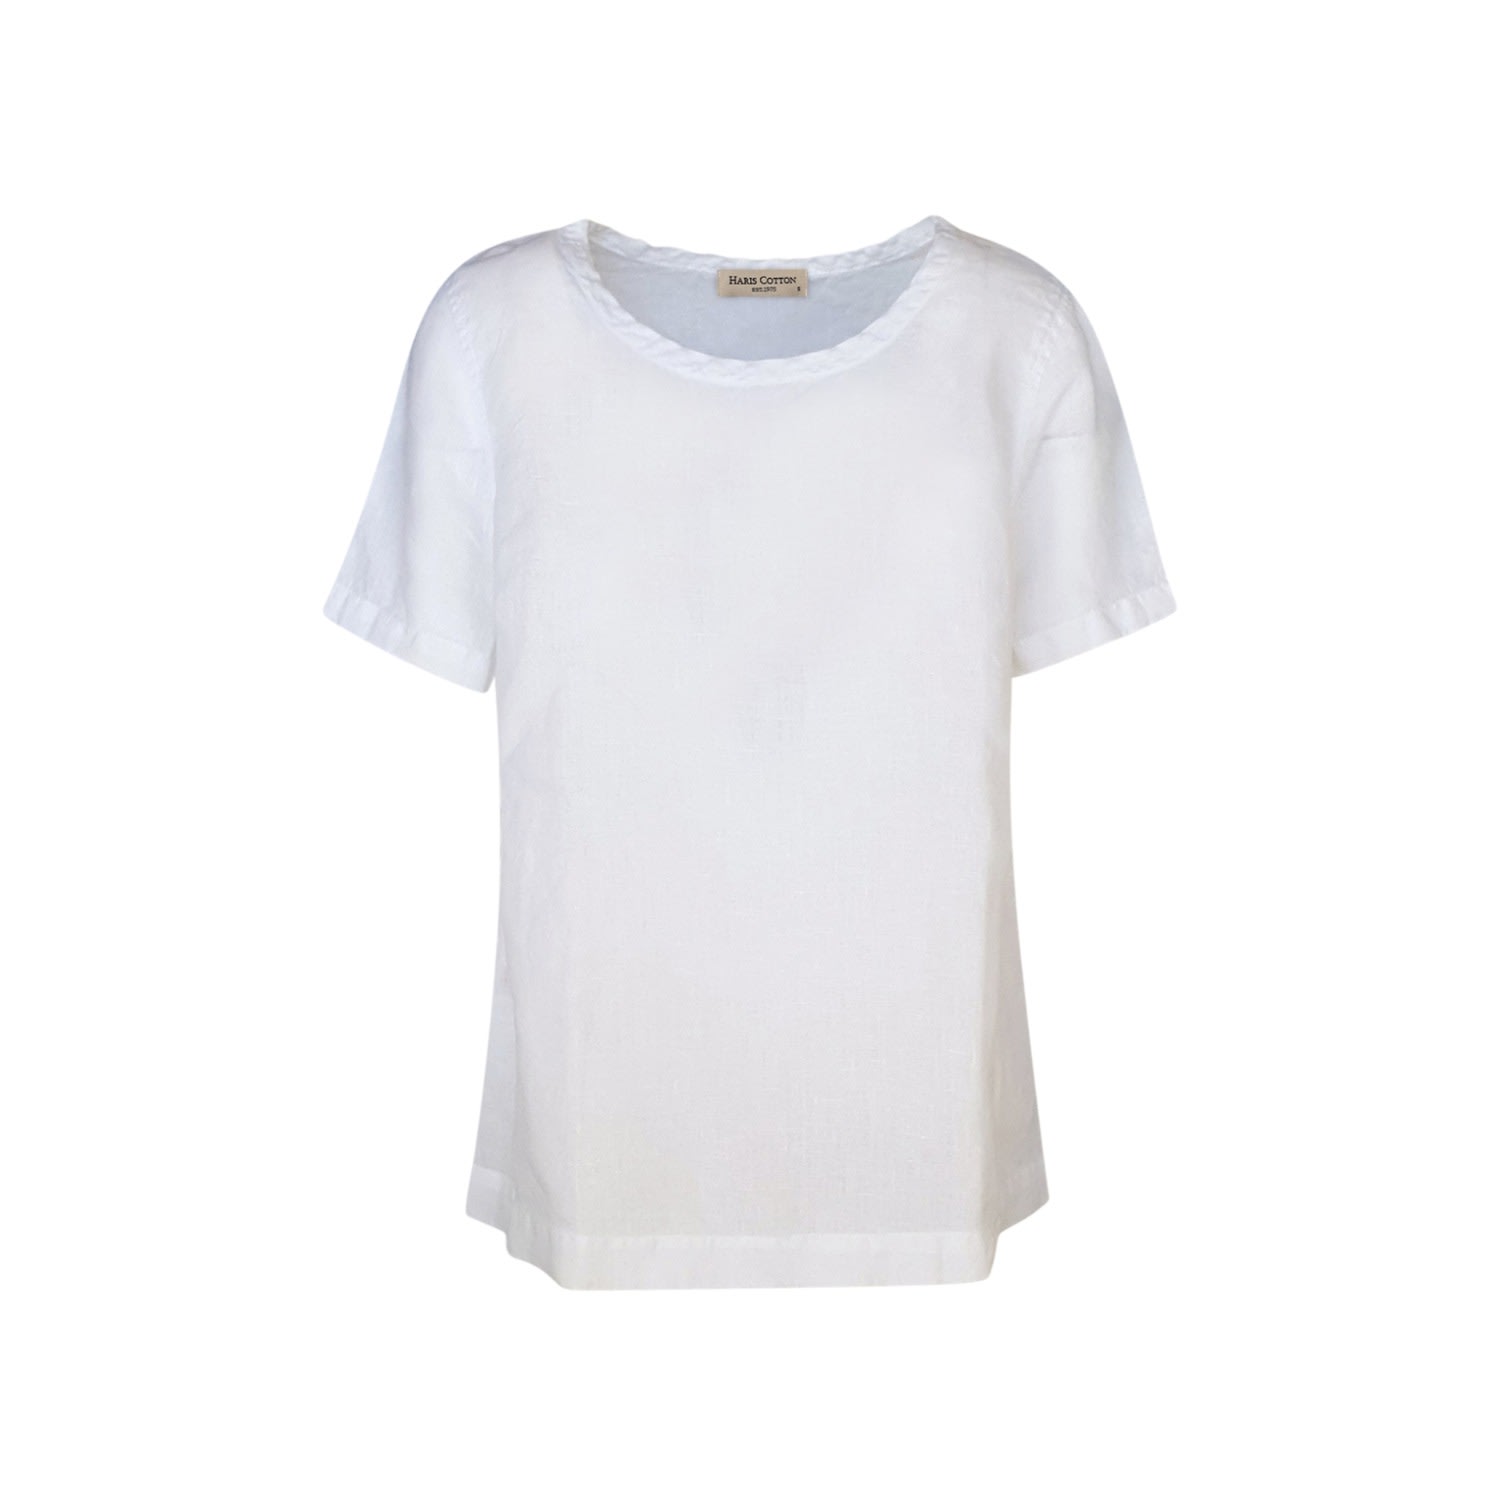 Haris Cotton Women's Linen T-shirt - White